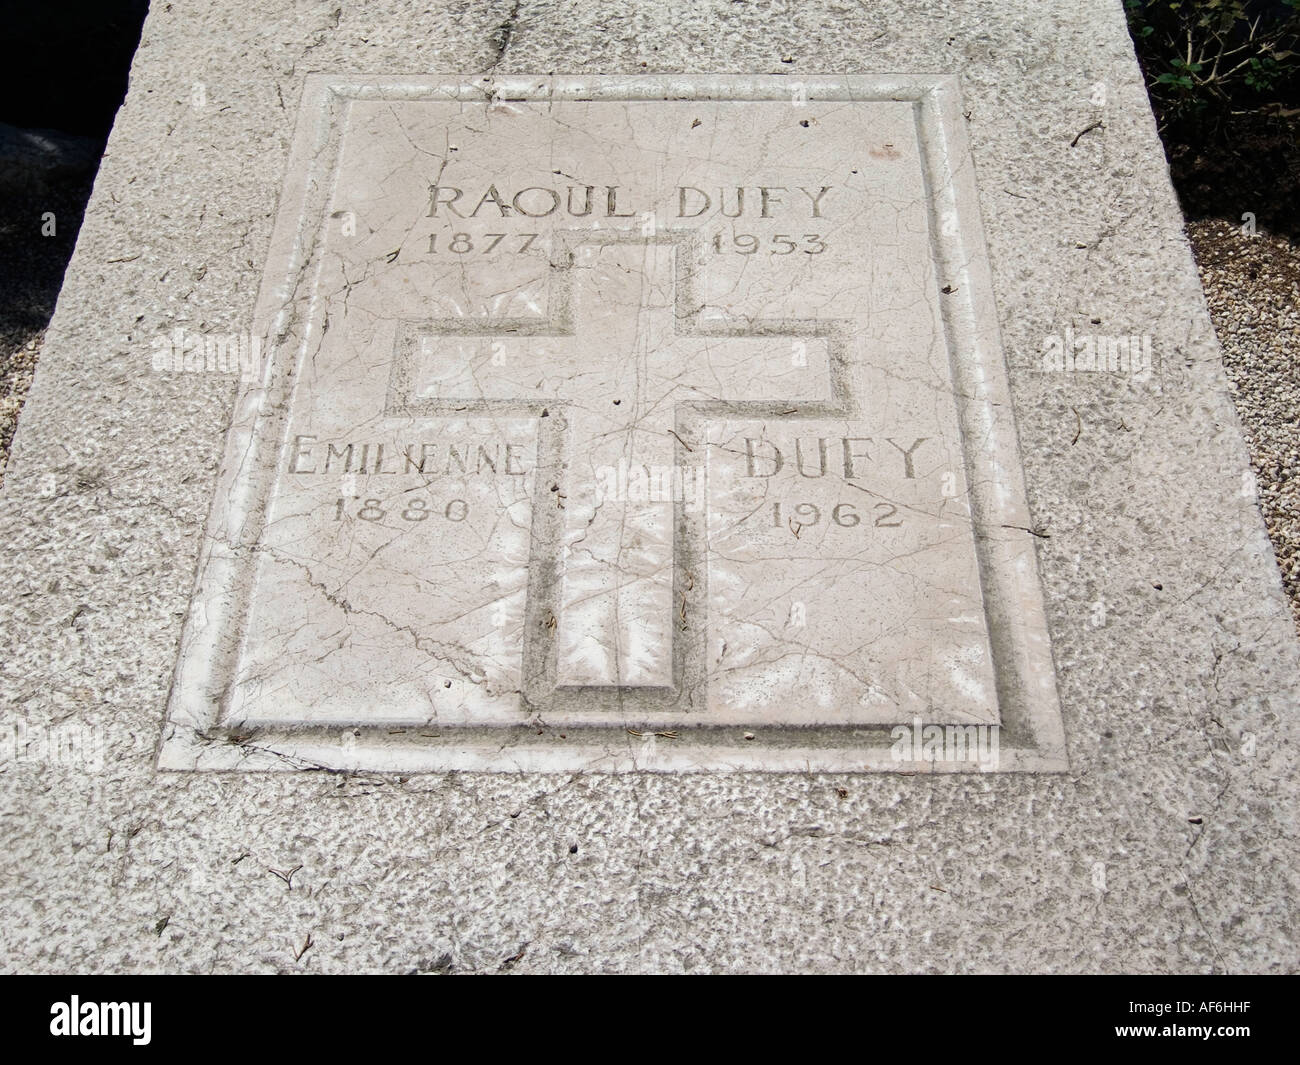 La Tombe de Raoul Dufy, Nice, France Banque D'Images